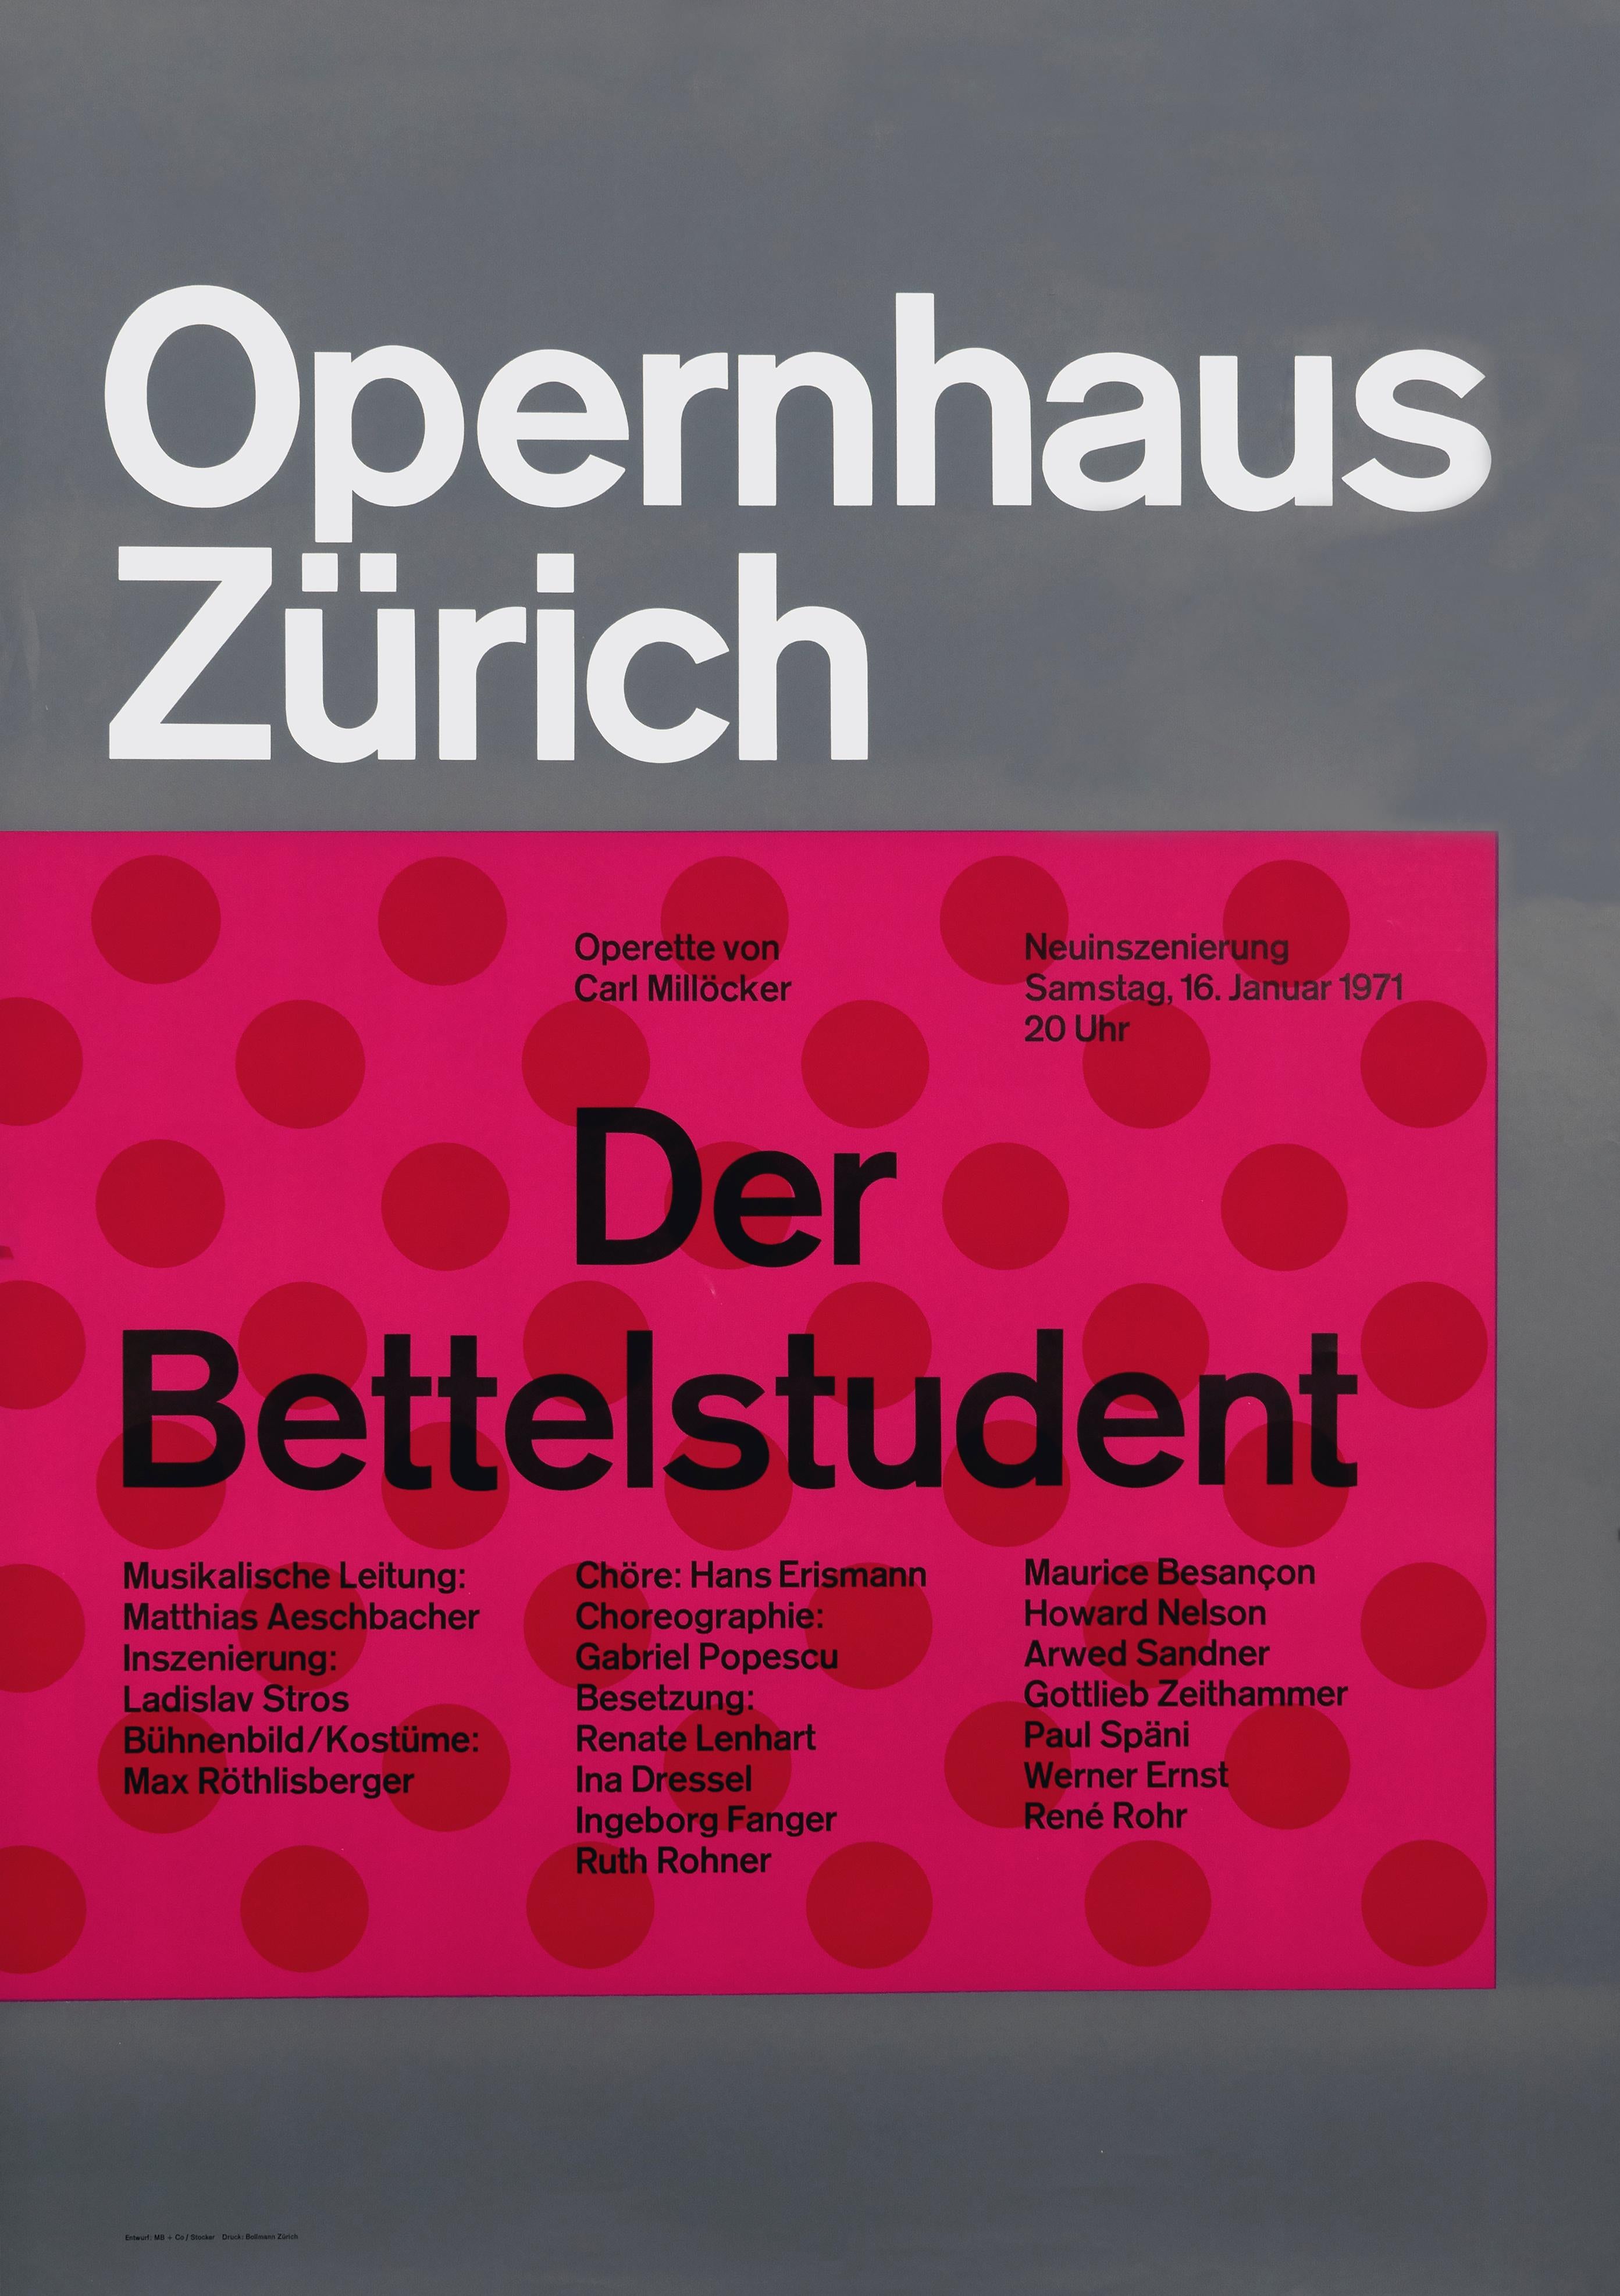 "Opernhaus Zurich - The Beggar Student" Swiss Opera Original Vintage Poster - Print by Josef Müller-Brockmann